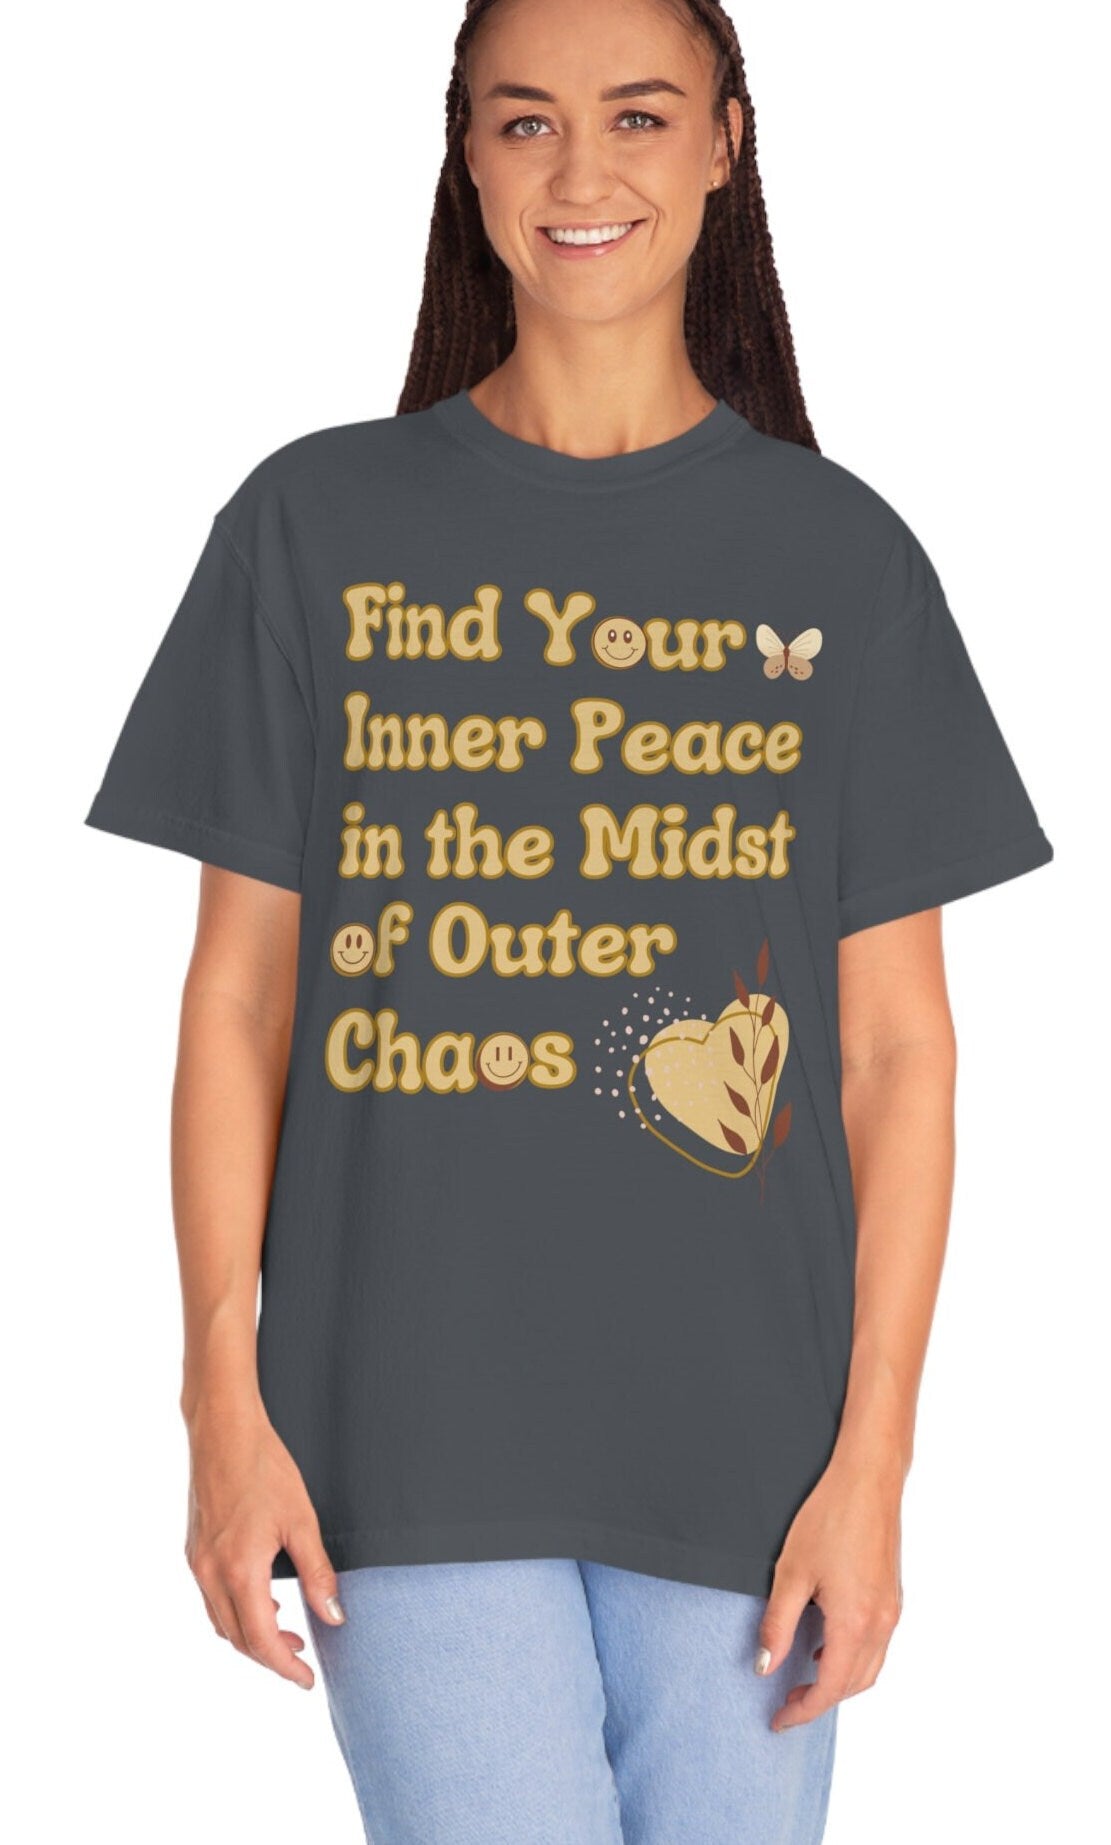 Find Your Inner Peace Mental Health Shirt, Anxiety Shirt, Inspirational Shirt, Motivation Shirt, Suicide Awareness